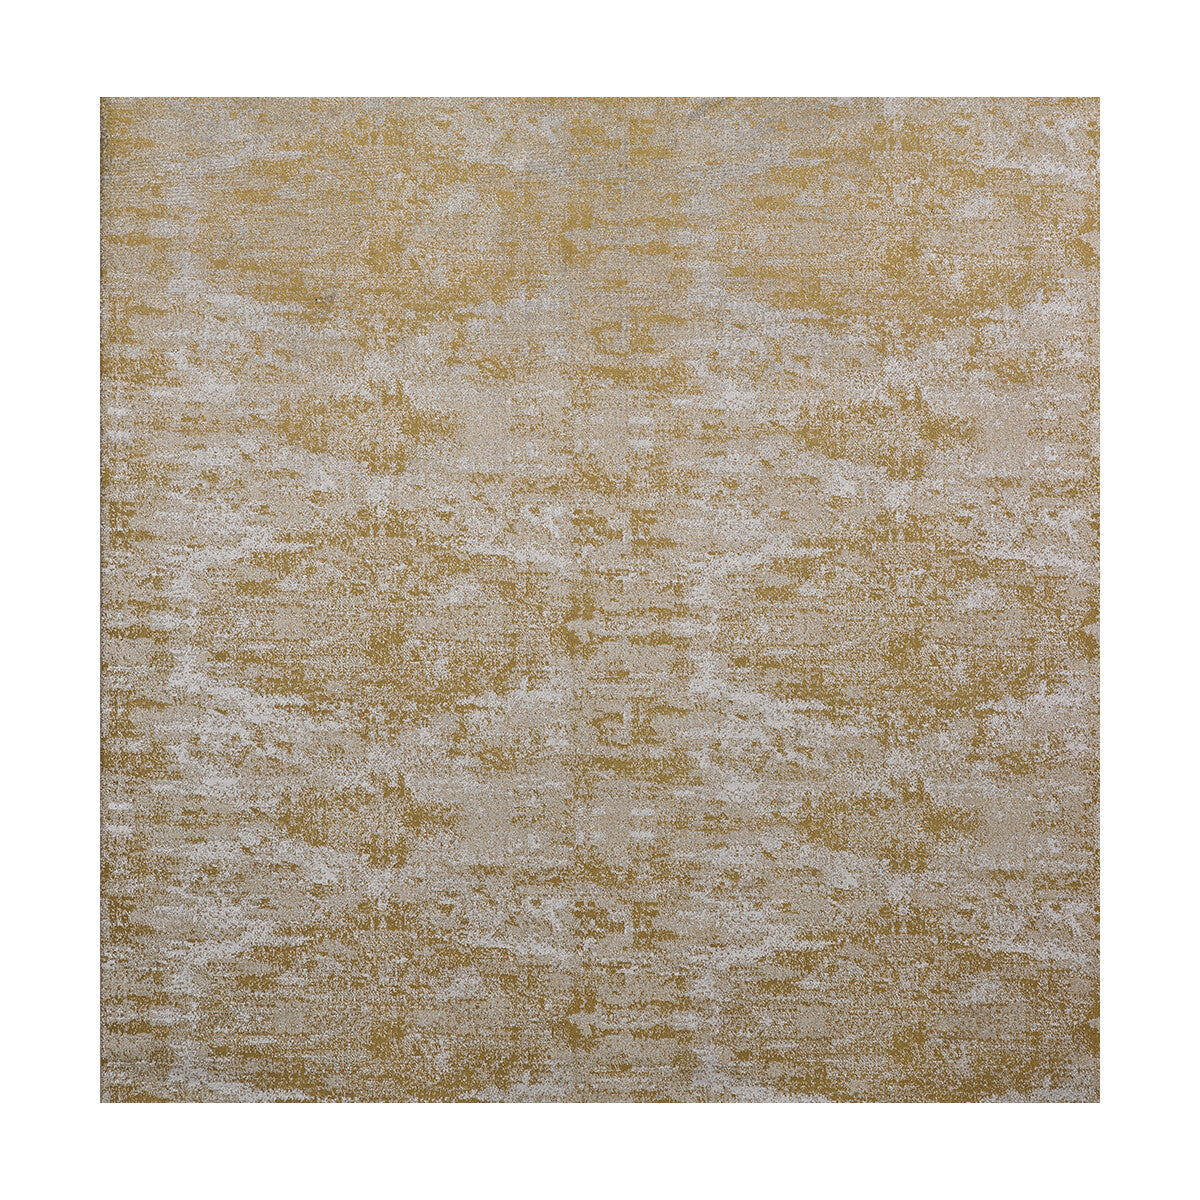 Arnoldson fabric in oro/plata color - pattern LCT5369.003.0 - by Gaston y Daniela in the Lorenzo Castillo III collection